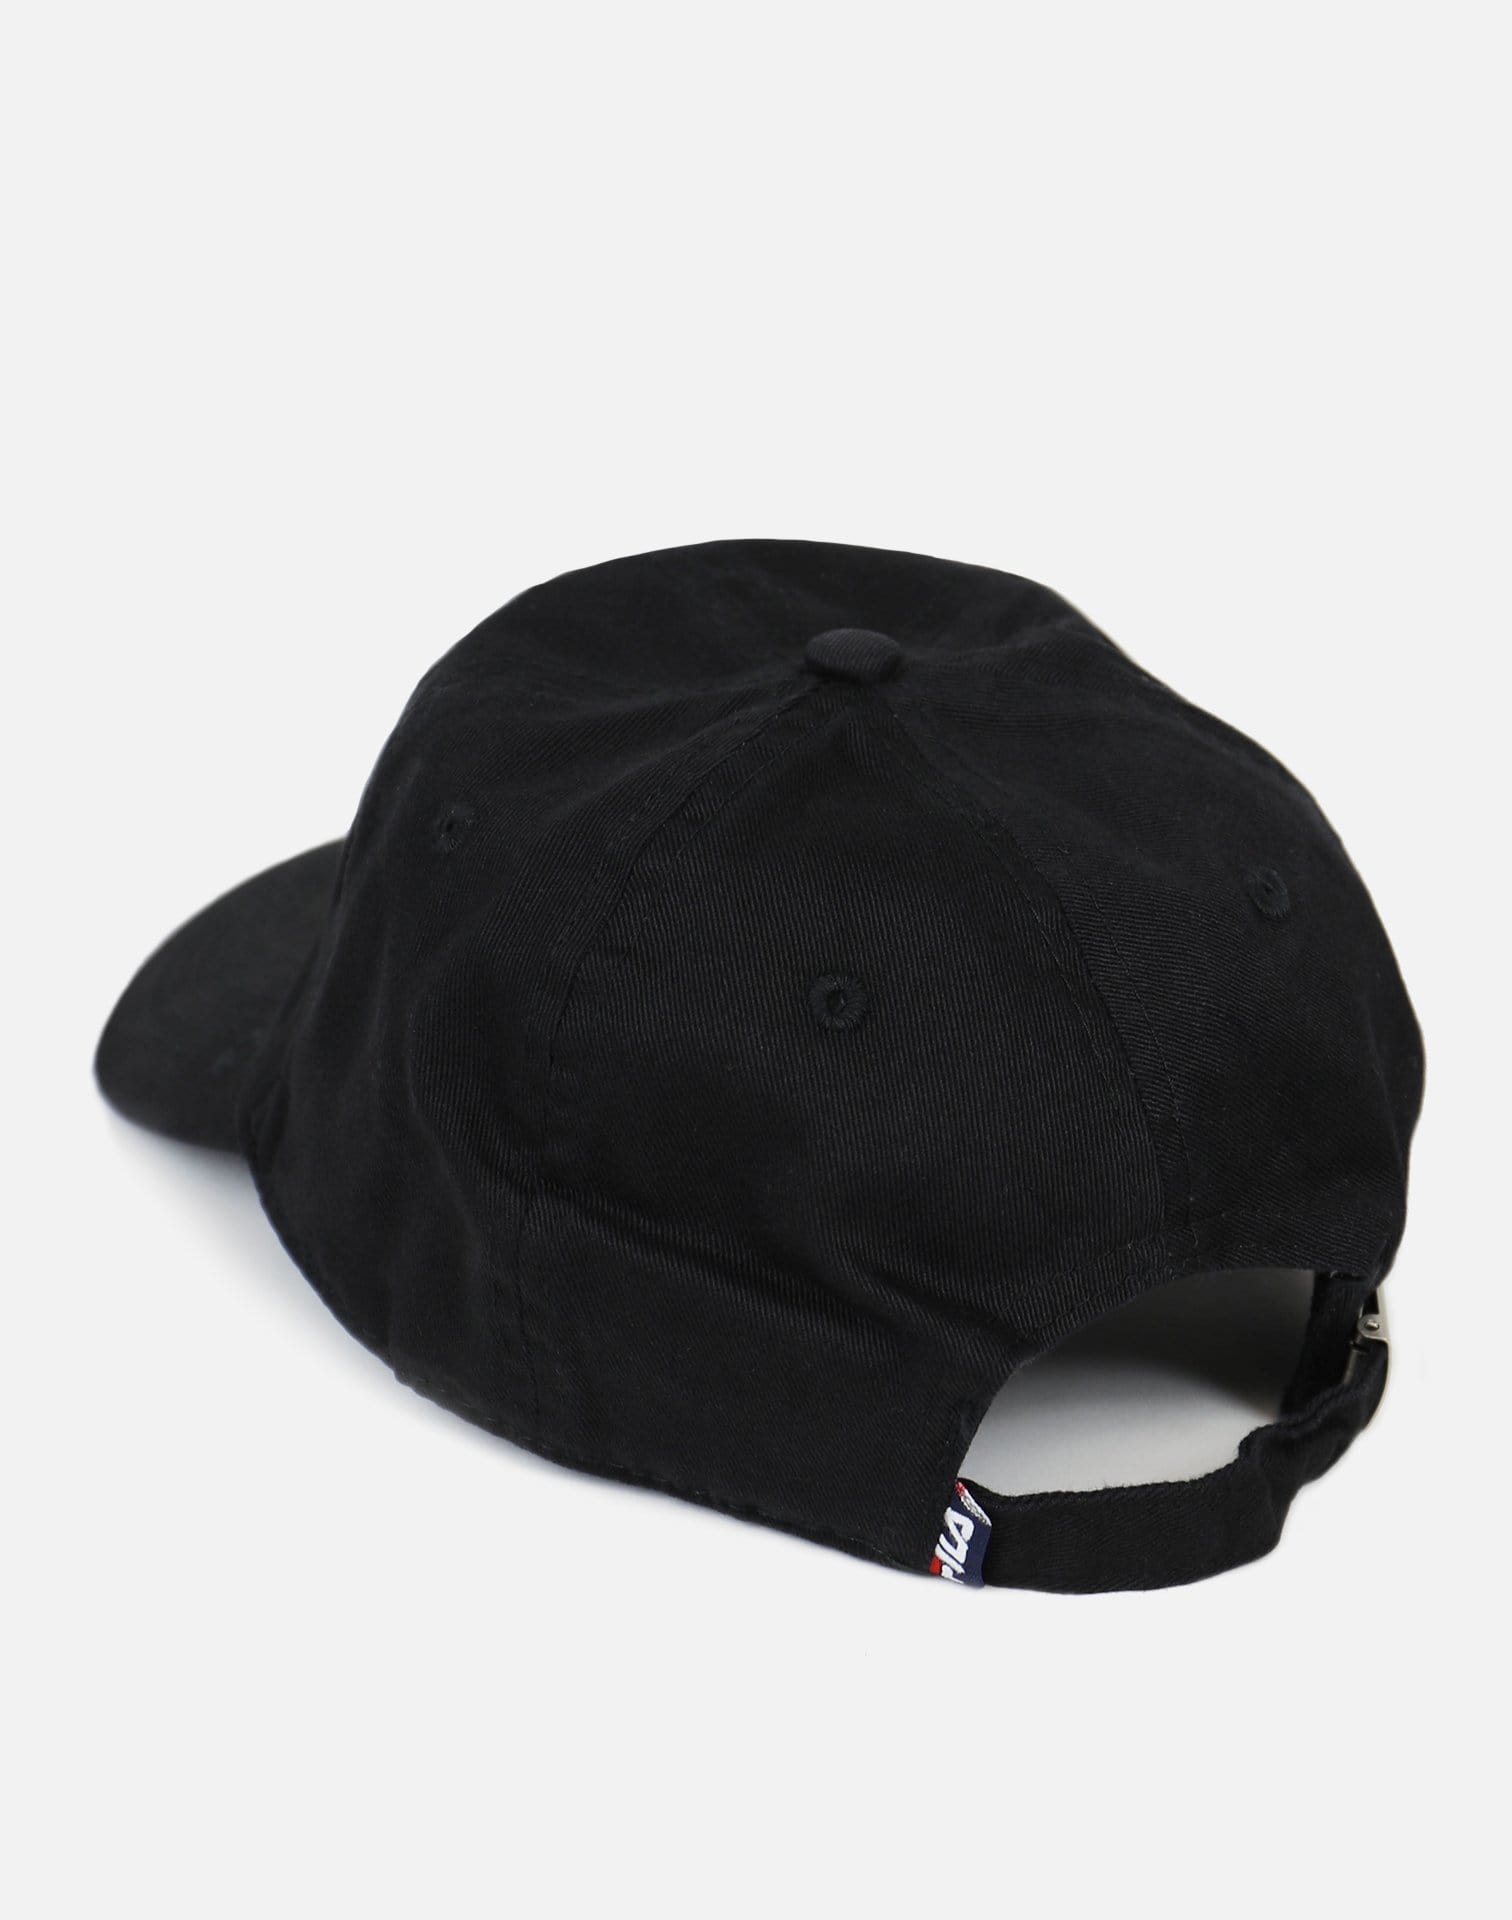 Fila Dad Hat (Black)